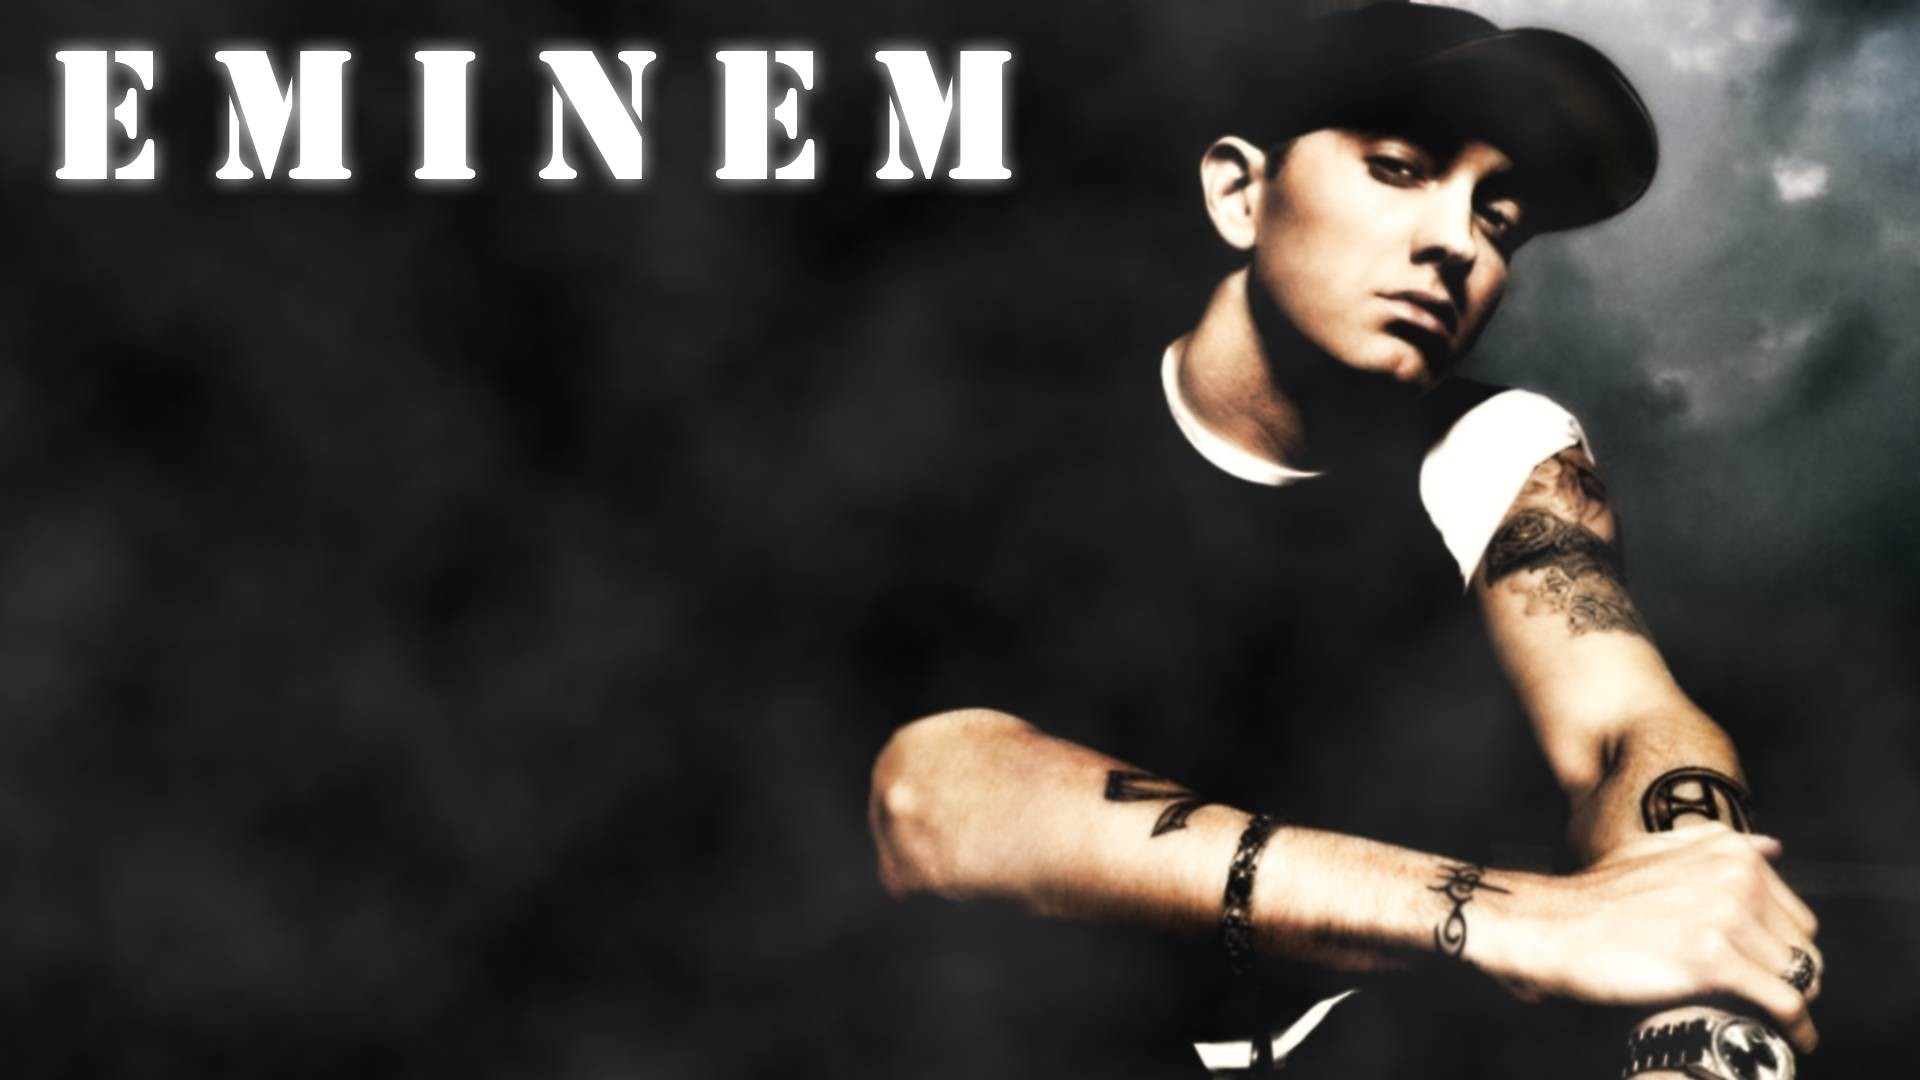 Full Hd 1080p Eminem Wallpapers Hd, Desktop Backgrounds - Taps - HD Wallpaper 